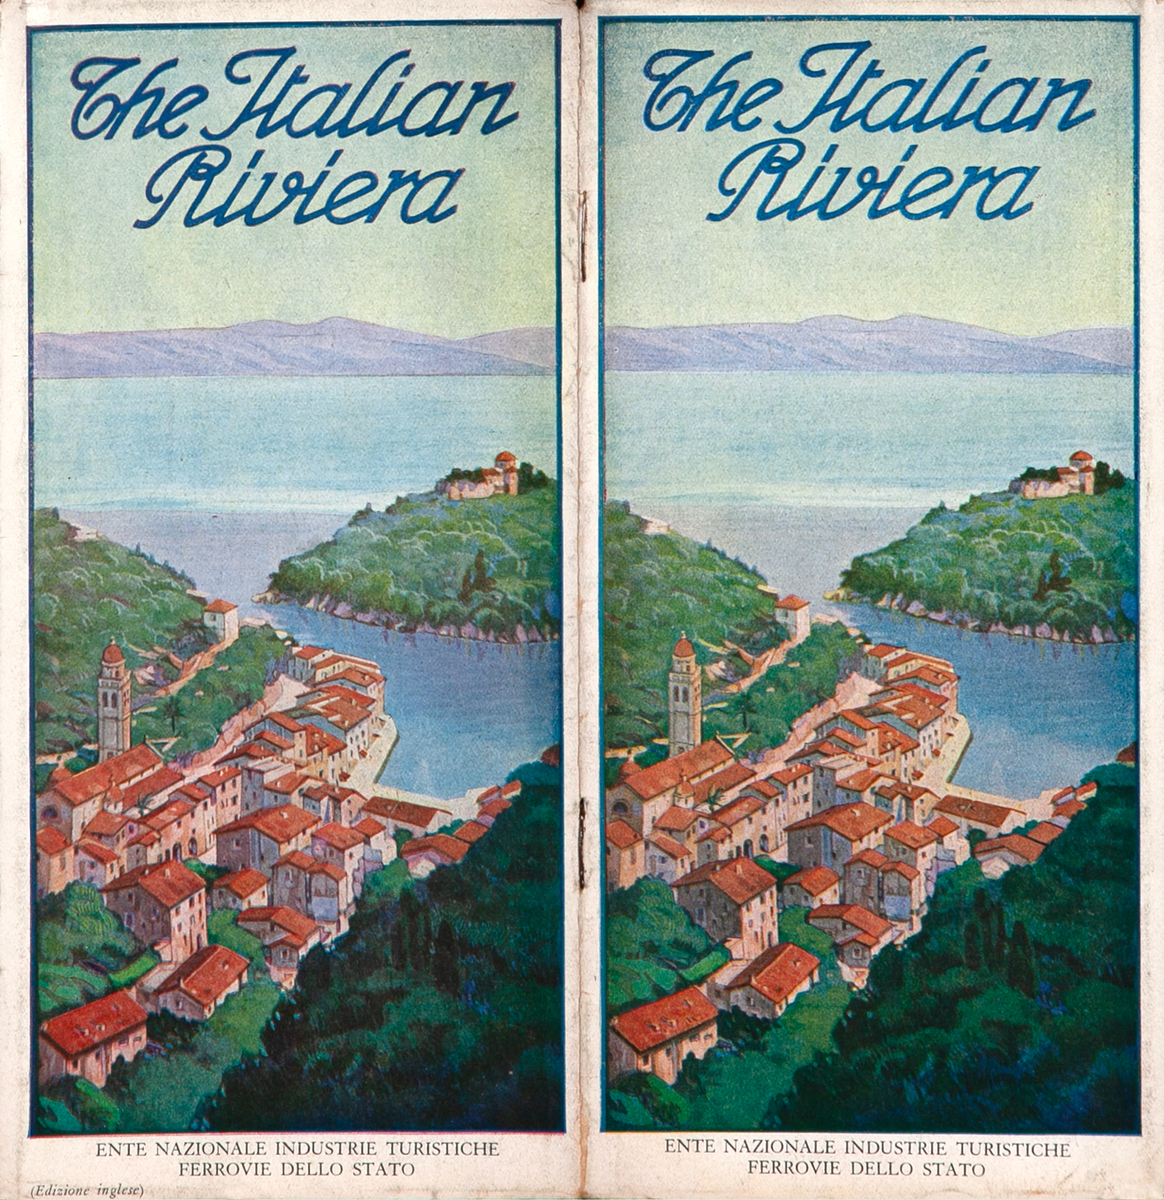 The Italian Riviera Original State Railways Travel Brochure